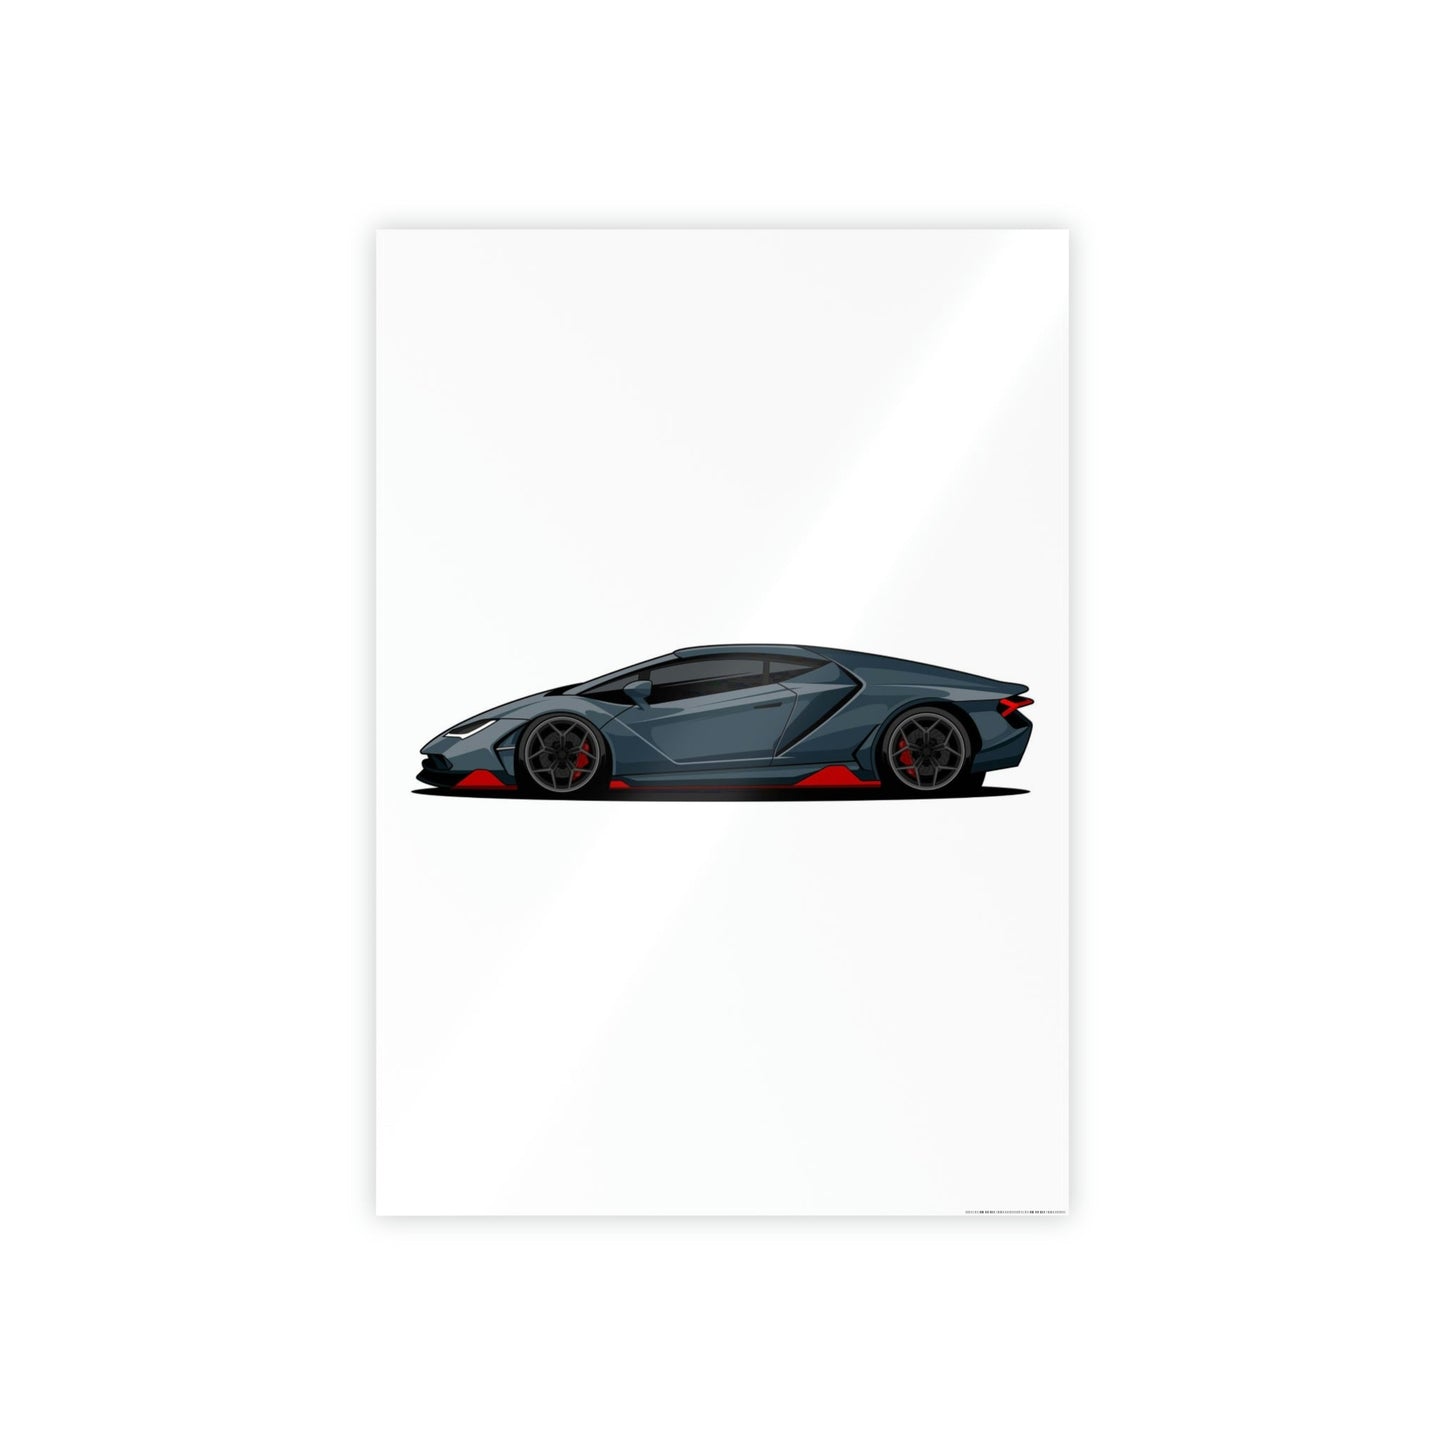 Dark Elegance: Black Lamborghini Framed Poster & Canvas for Wall Decor